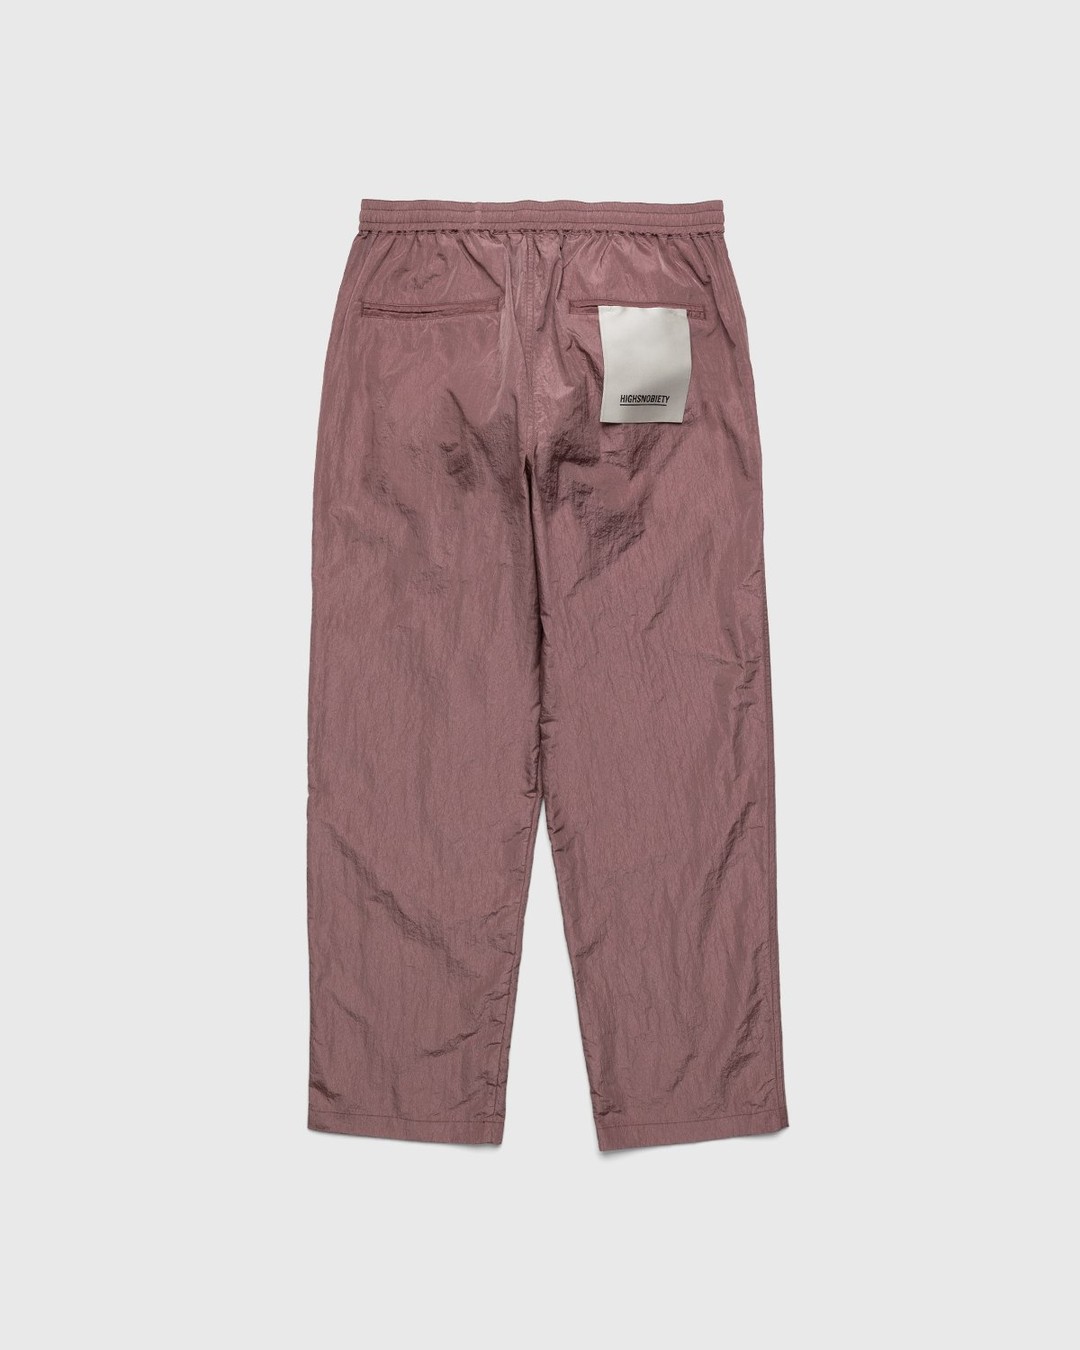 Highsnobiety – Crepe Nylon Elastic Pants Rose Gold - Pants - Pink - Image 2